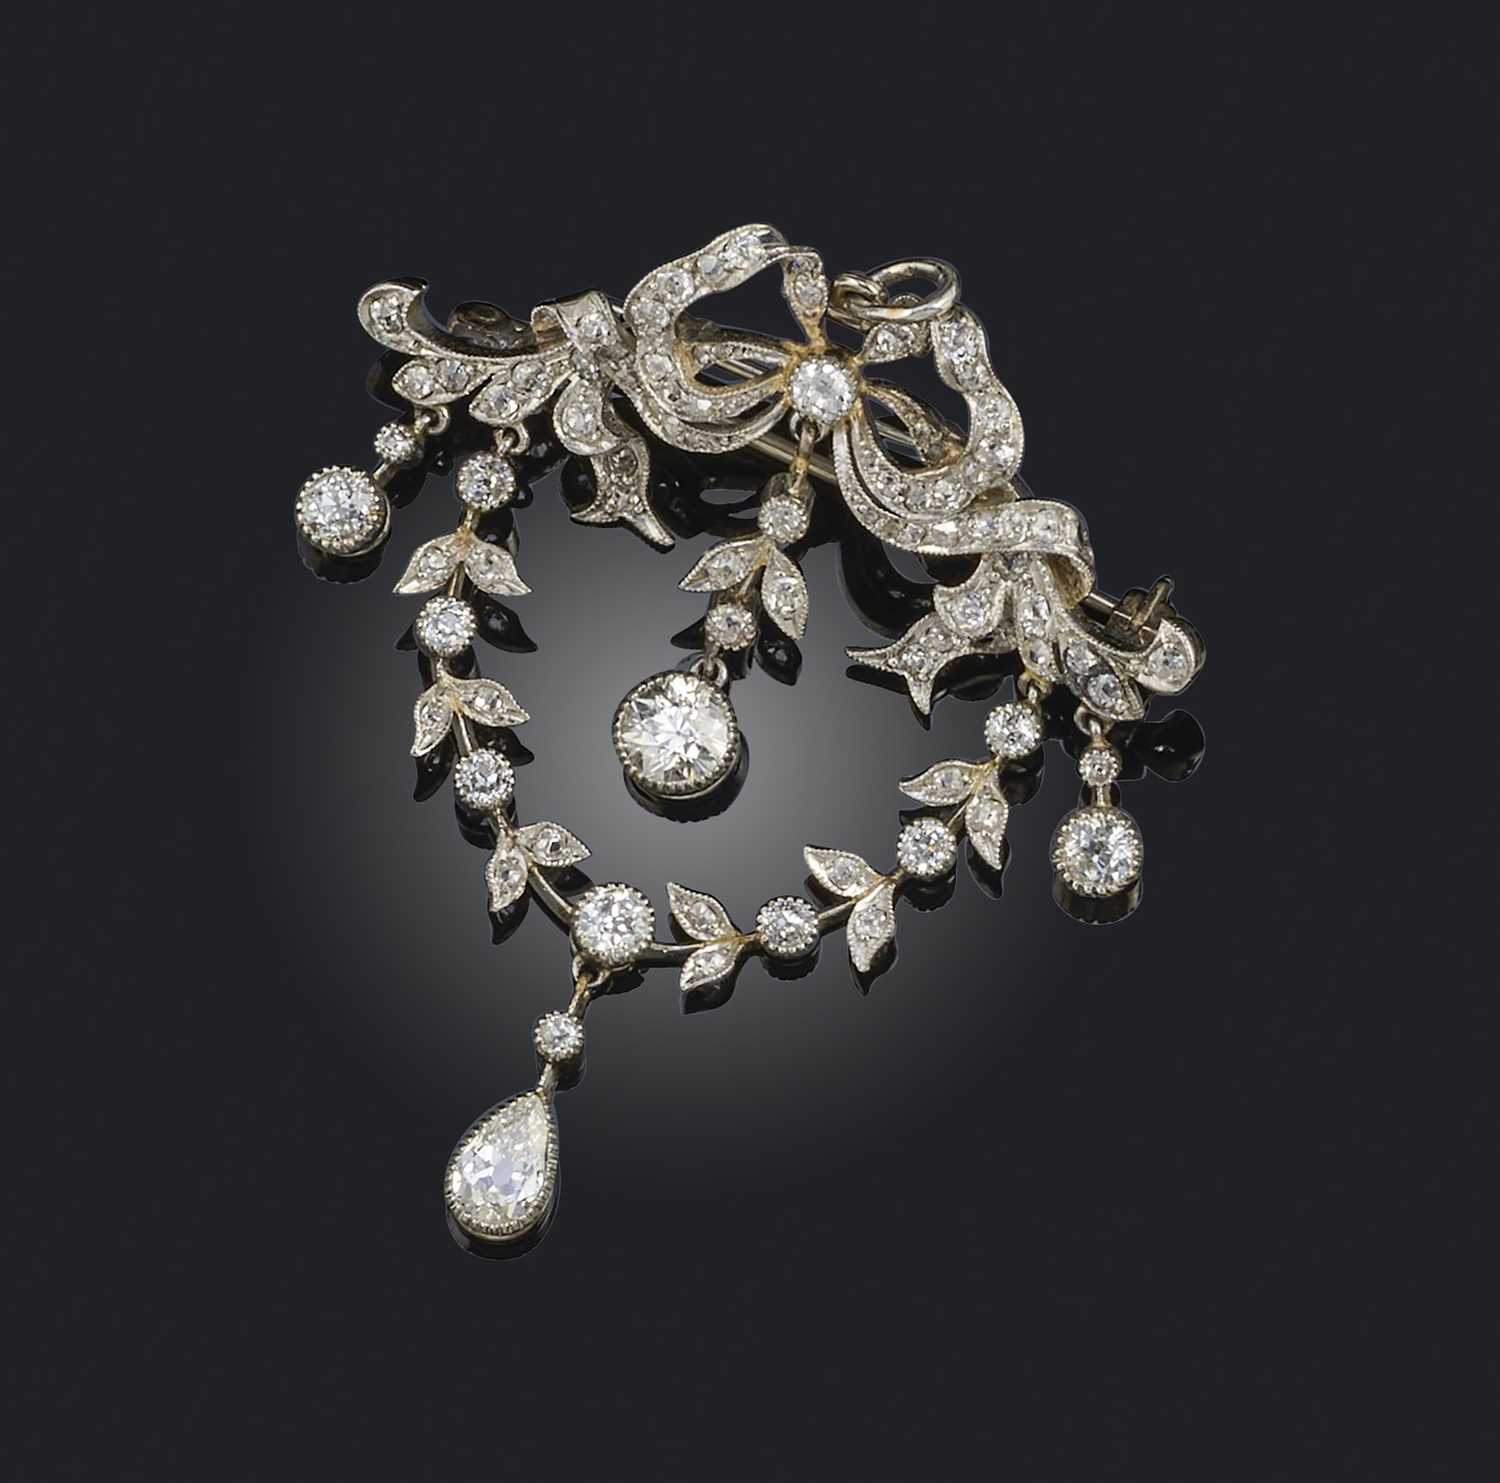 A Belle Epoque diamond brooch, set with three articulated diamonds diamond drops with a diamond-